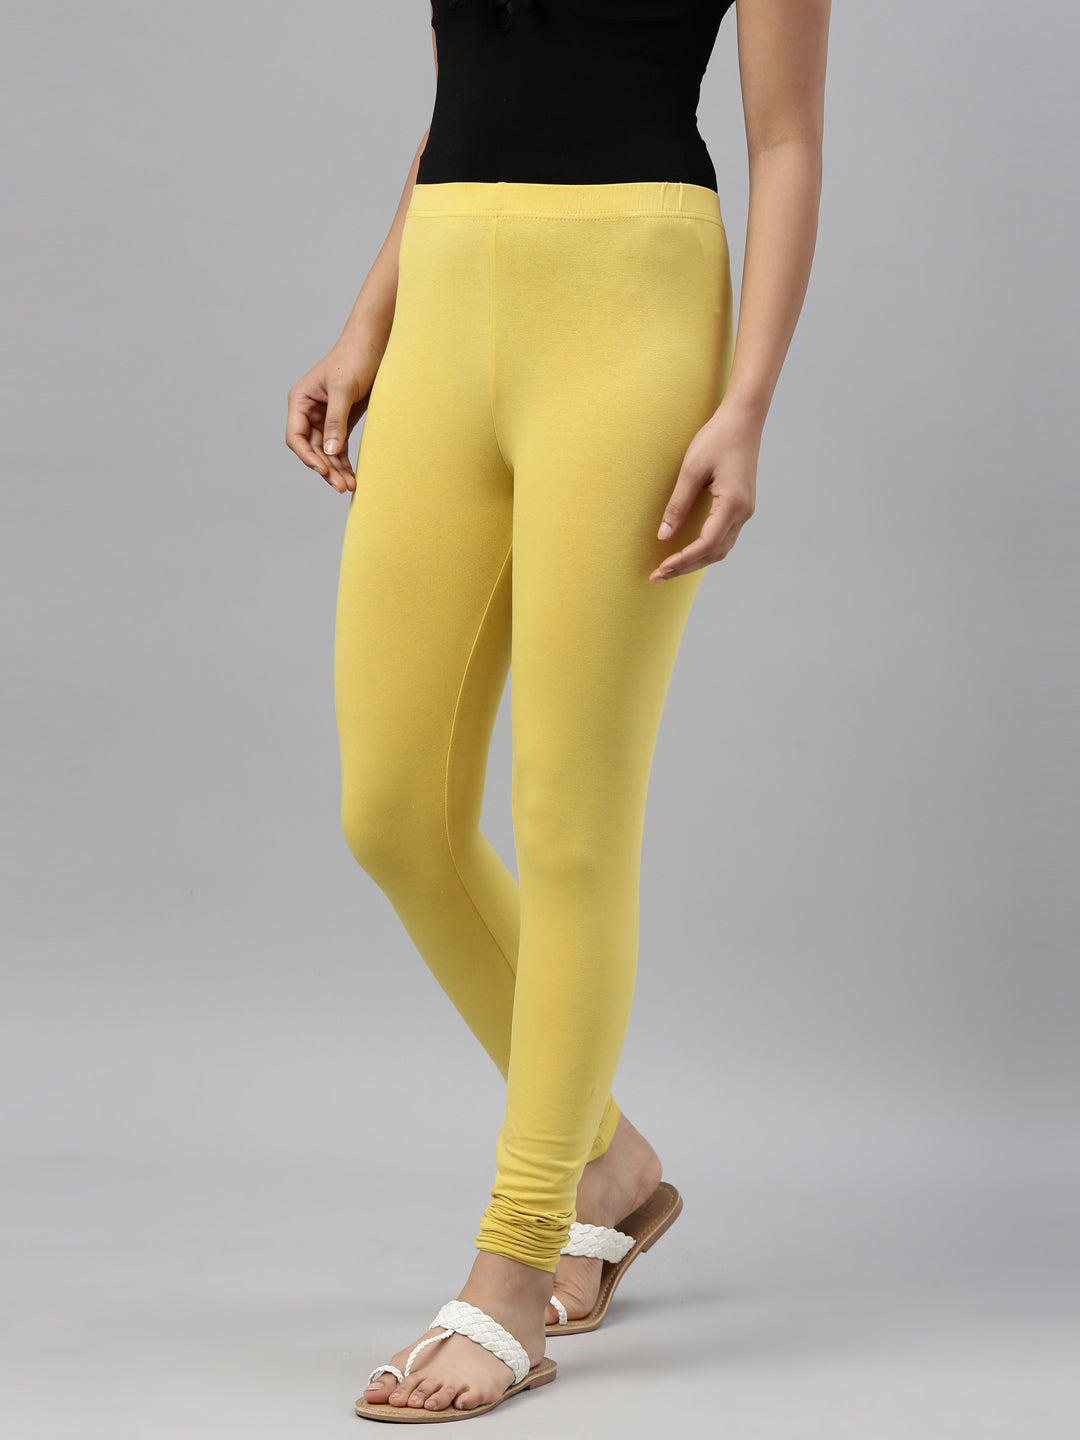 Lemon Color Women Cotton Bollywood Indian Legi Churidar Leggings Pants